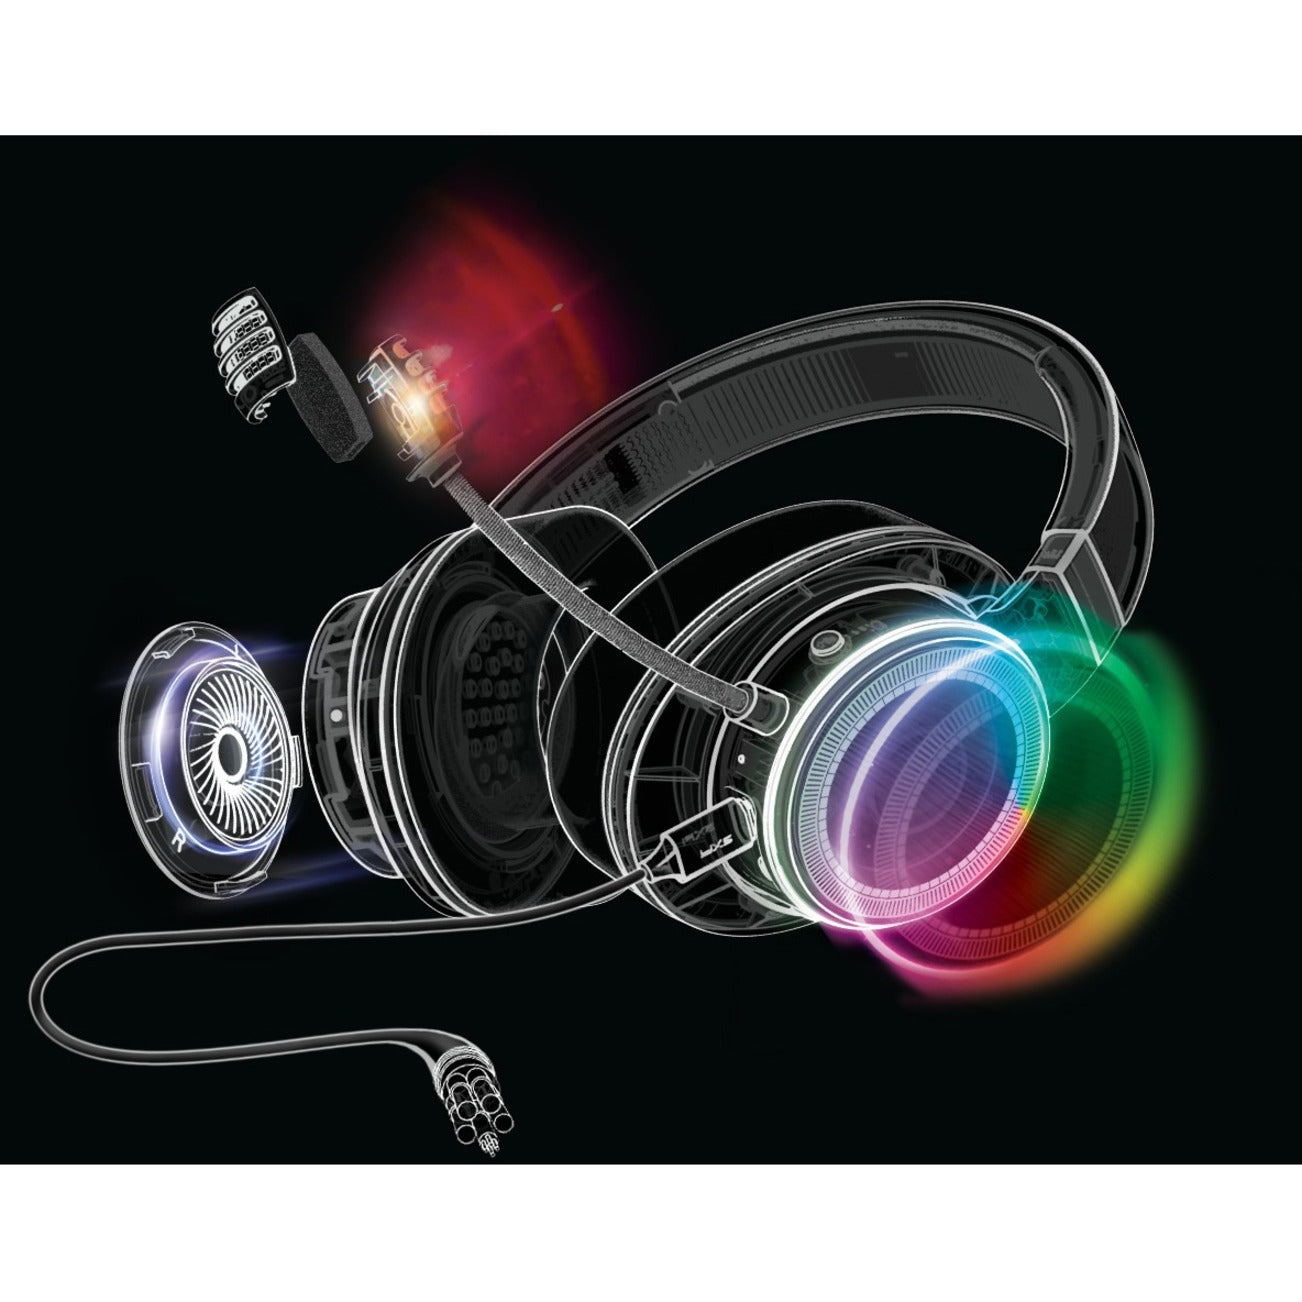 Creative 51EF0880AA000 SXFI Gamer Gaming Headset, 7.1 Surround Sound, RGB Light, Detachable Microphone